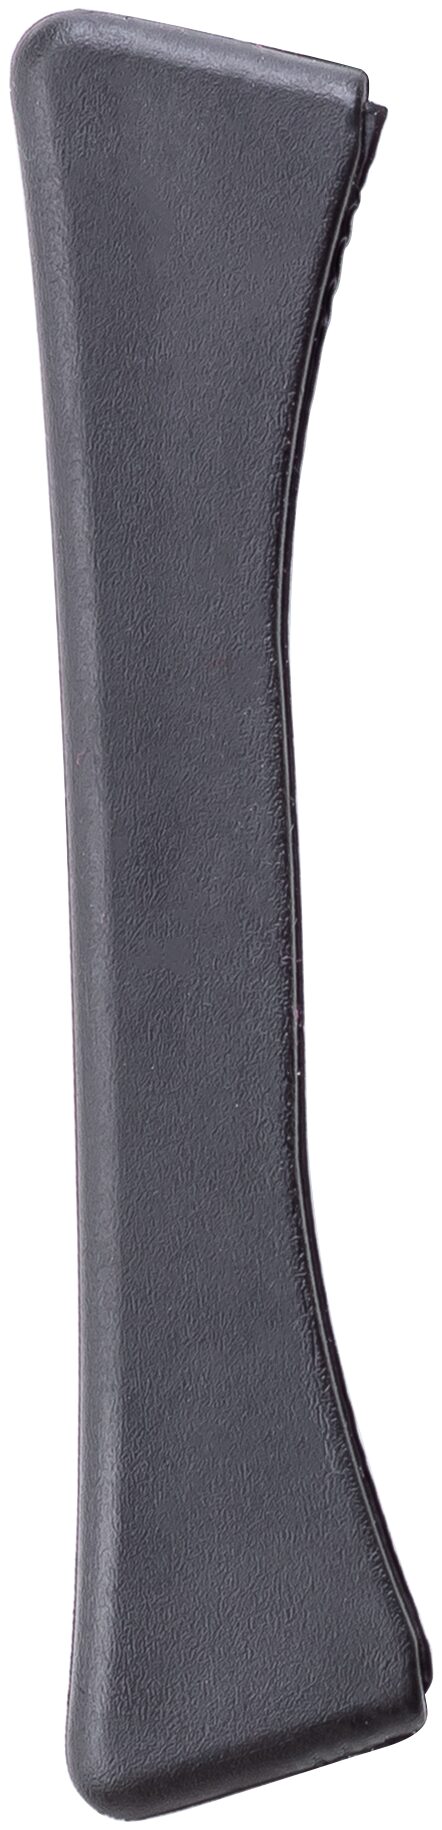 HAZET Handbeil · 600 g 2132-600